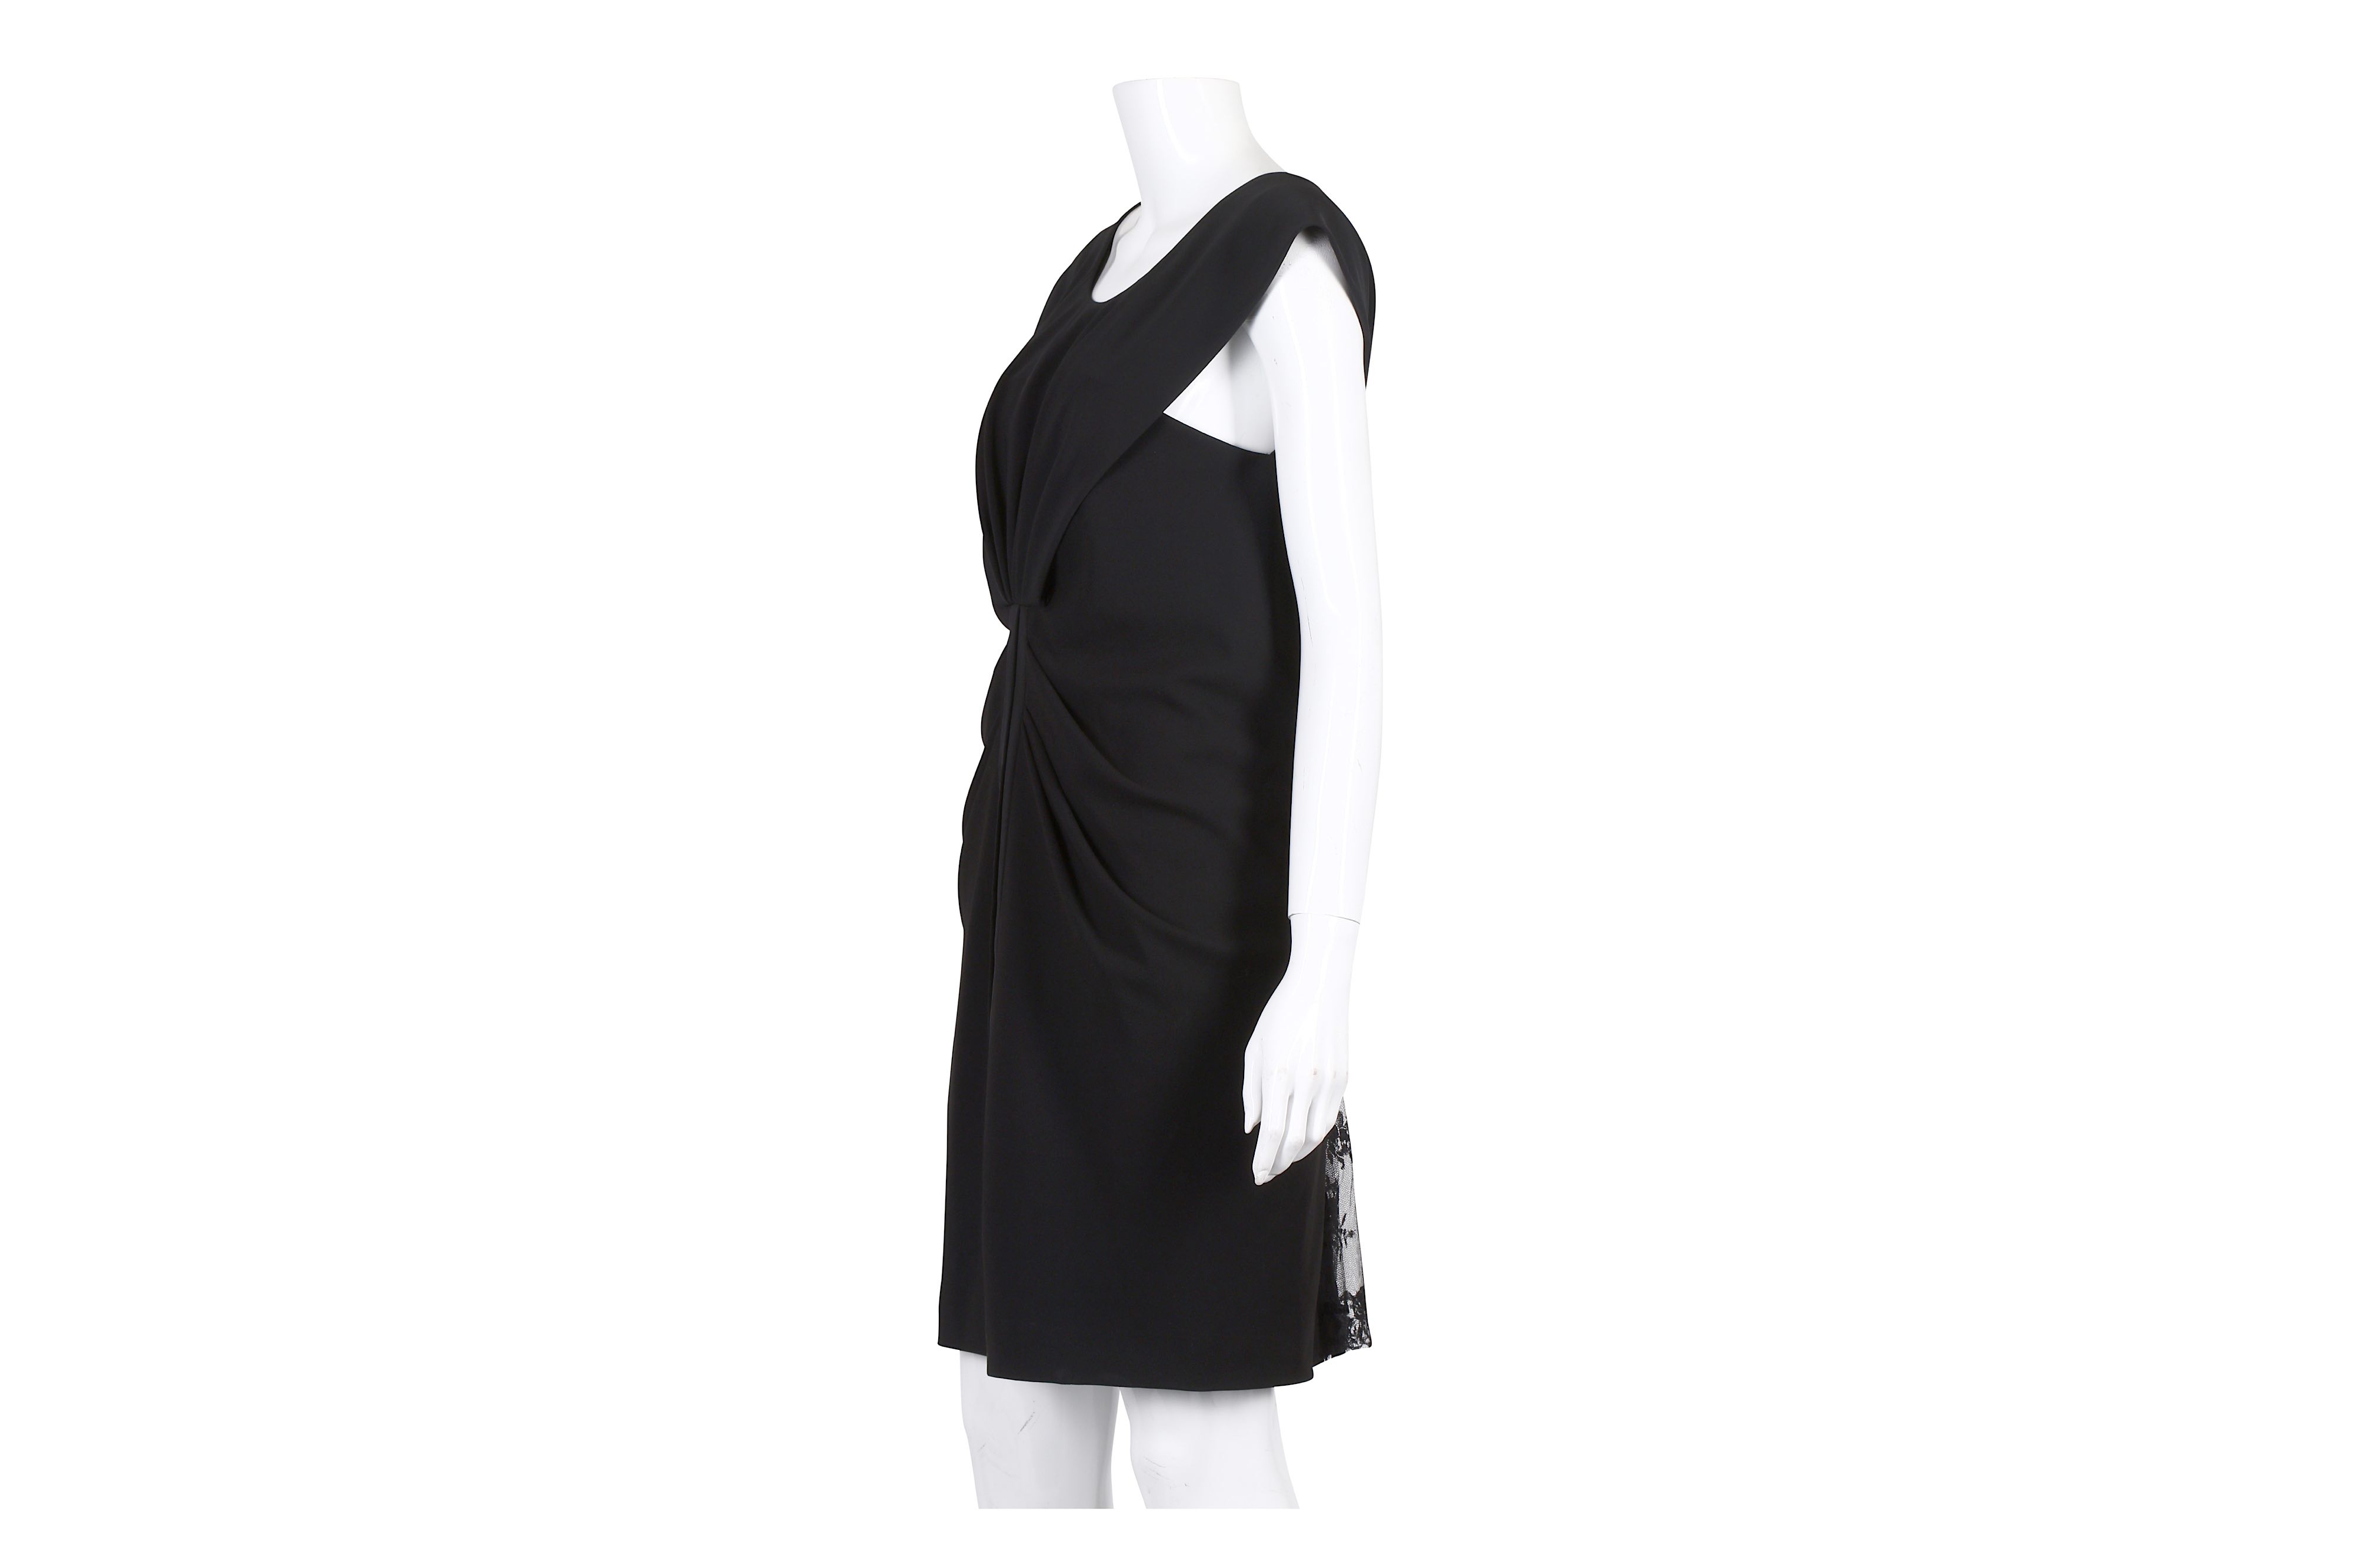 Balenciaga Black Dress - Image 3 of 5